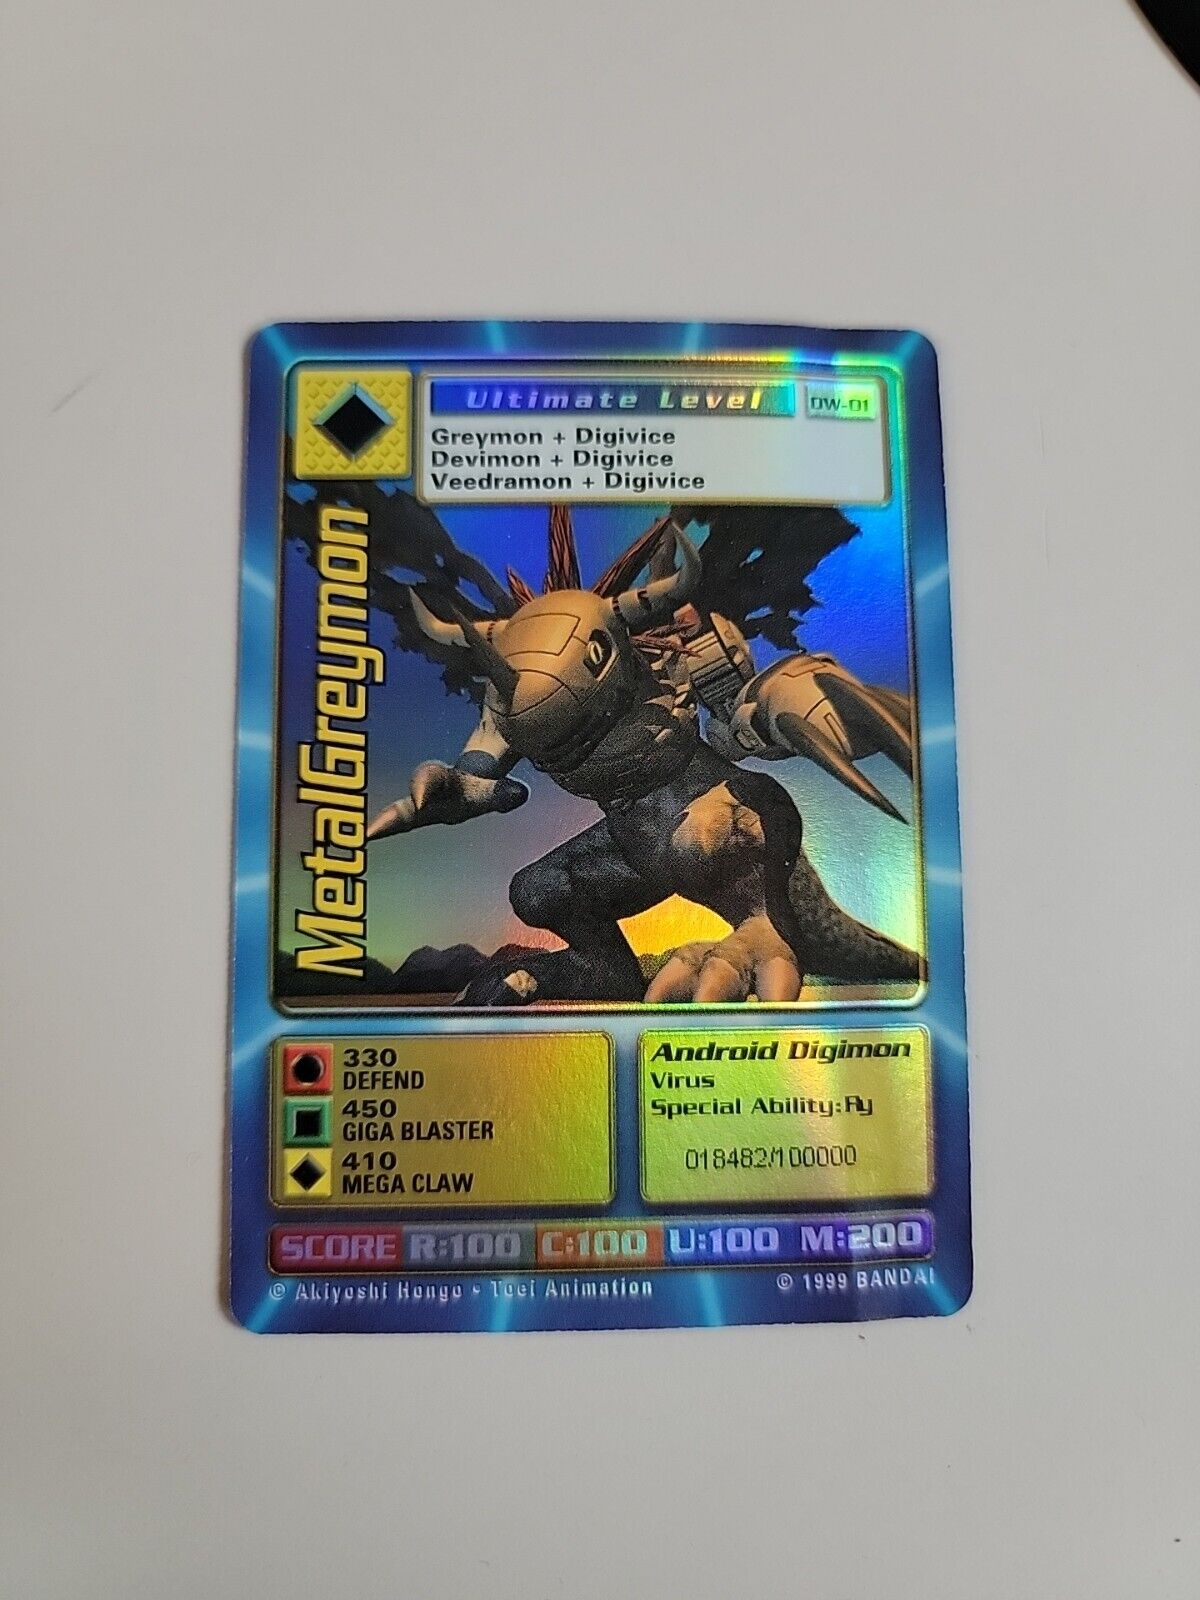 Digimon World PlayStation Promo DW-01 MetalGreymon - number 018482 / 100,000